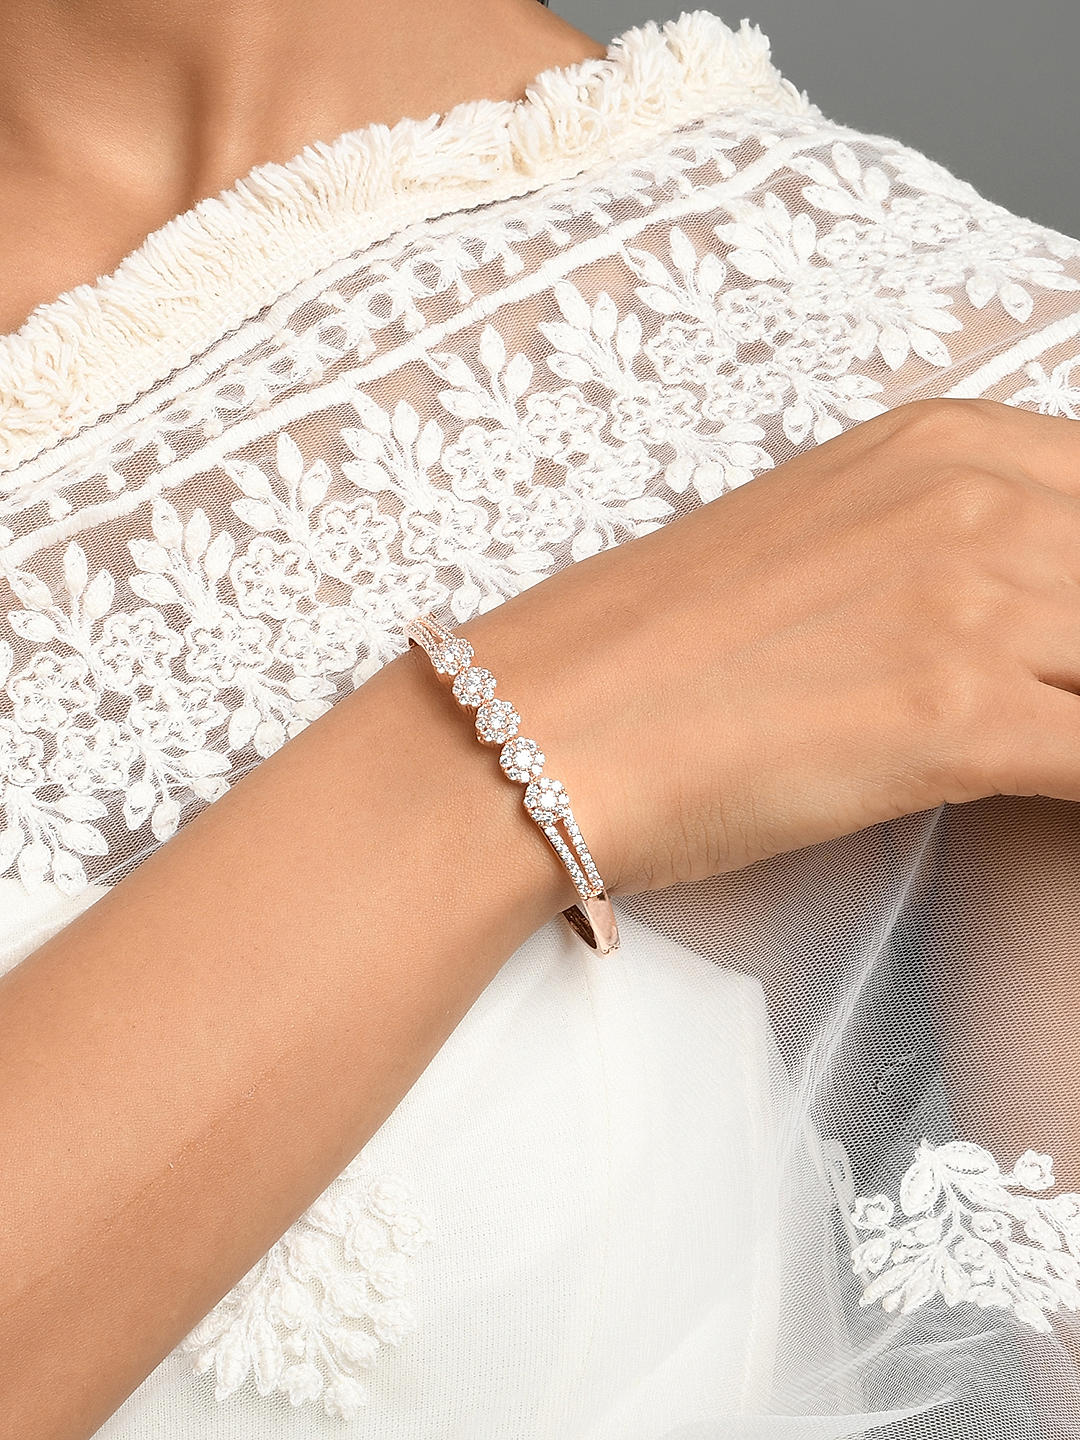 Buy 925 Sterling Silver American Diamond Adjustable Tennis Bracelet for  Women Girls Adjustable online